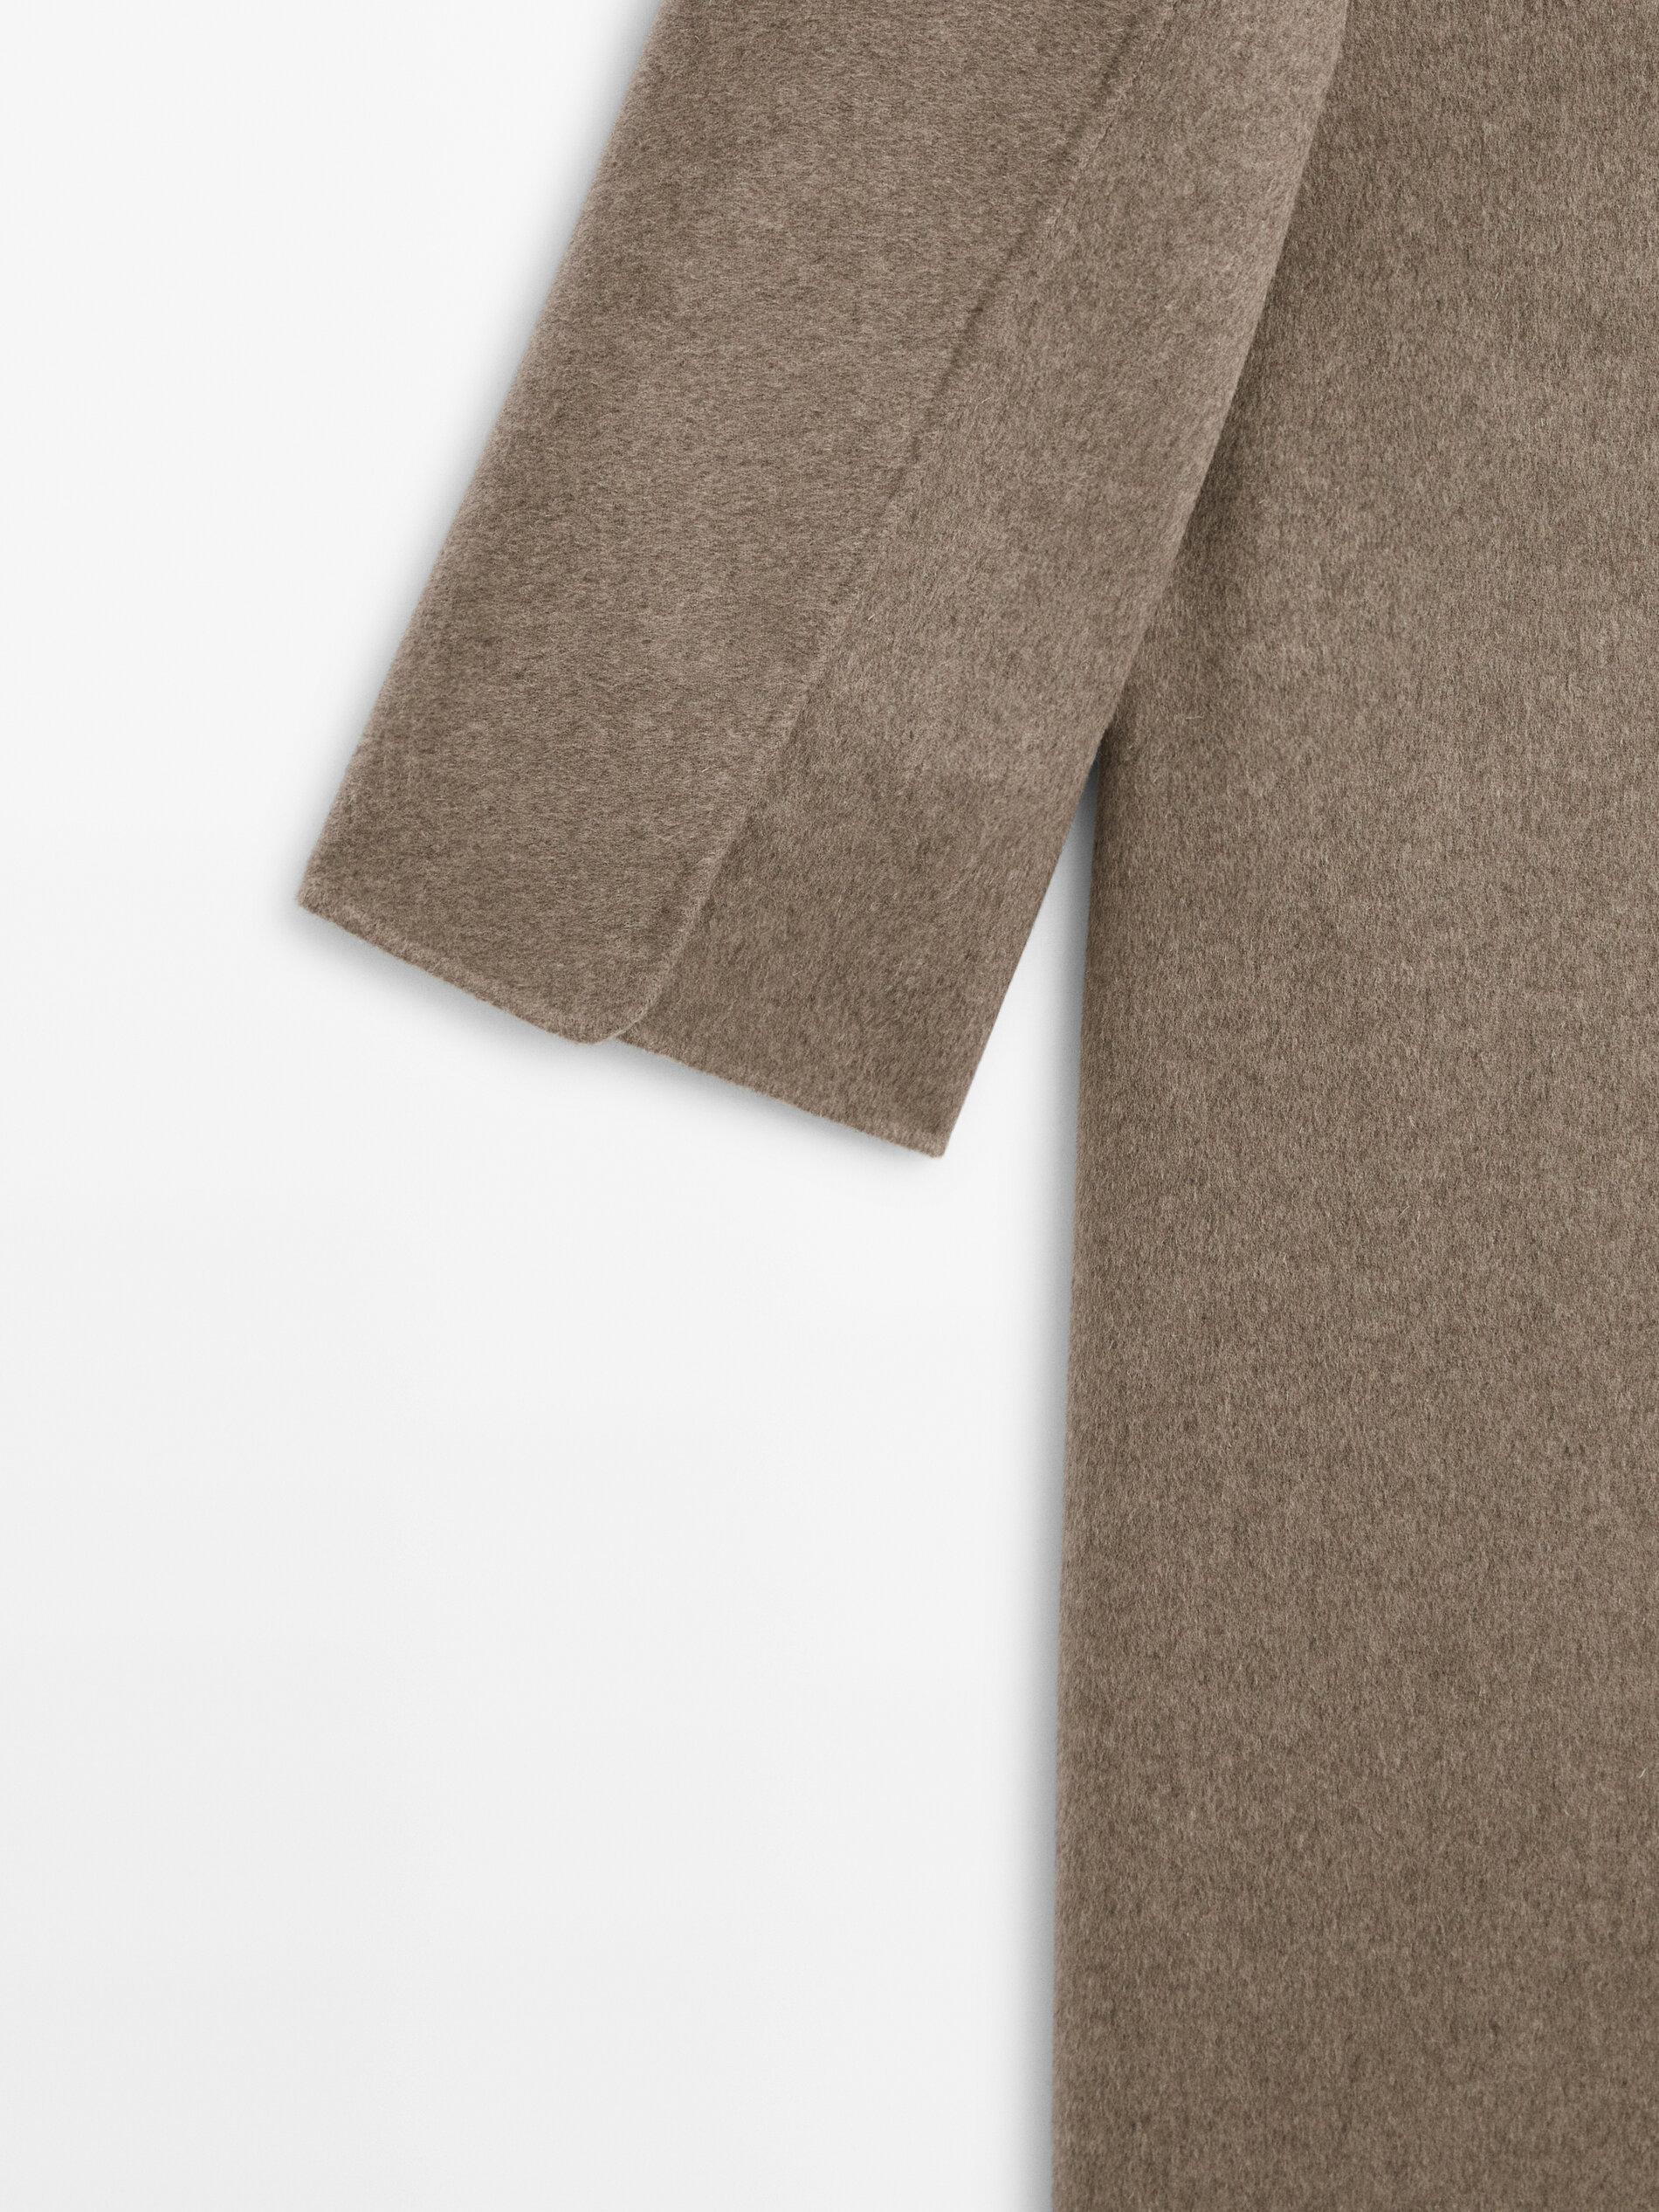 Massimo Dutti - - Wool Blend Robe Coat with Belt - Cream - Xs